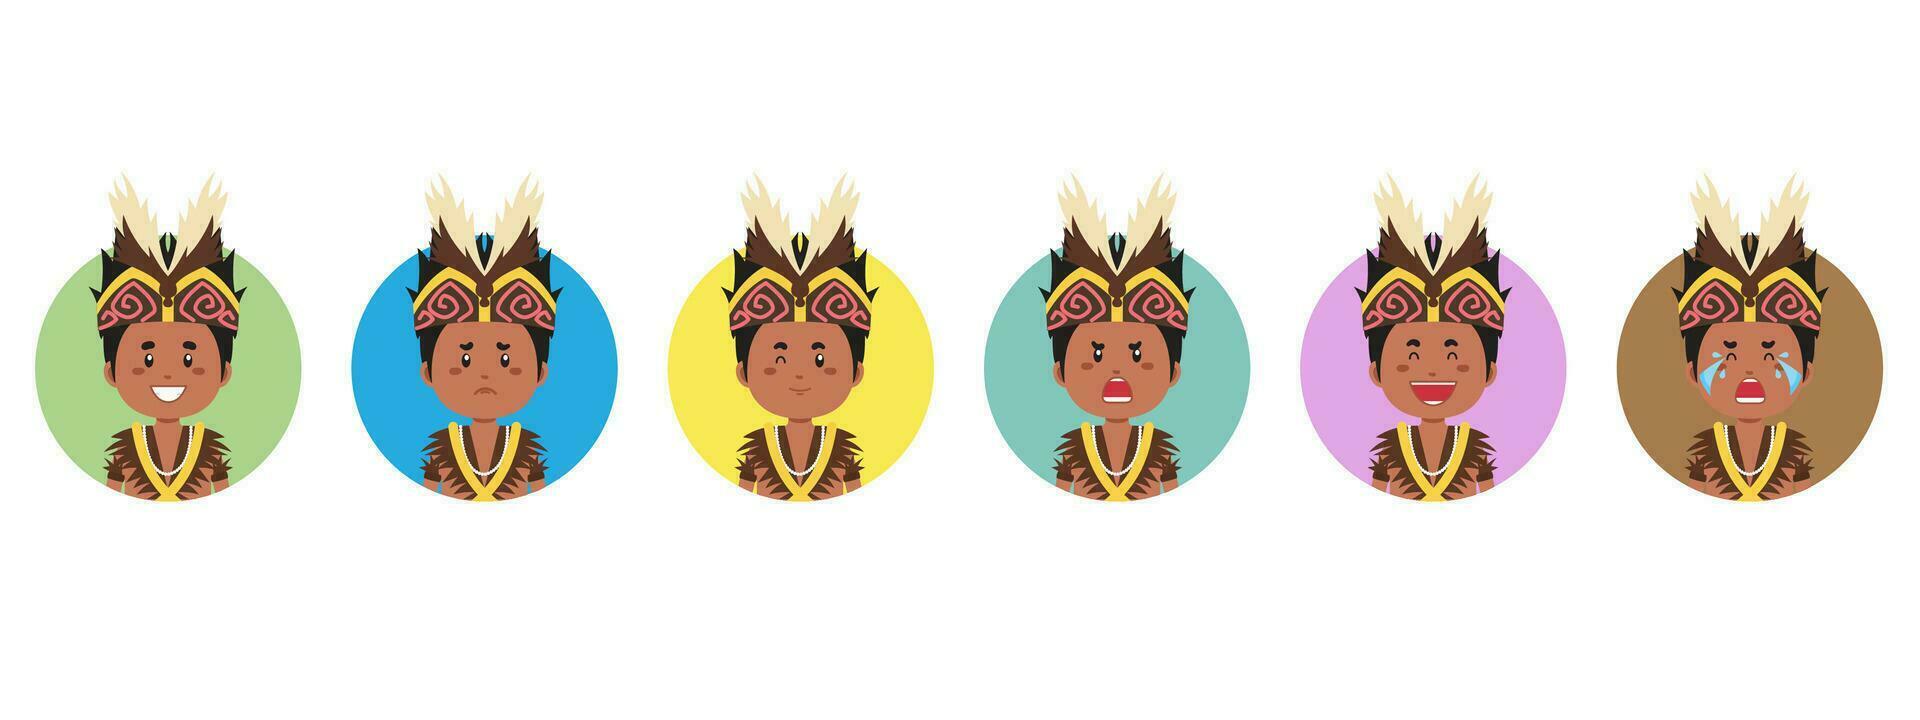 papua indonesiska avatar med olika uttryck vektor